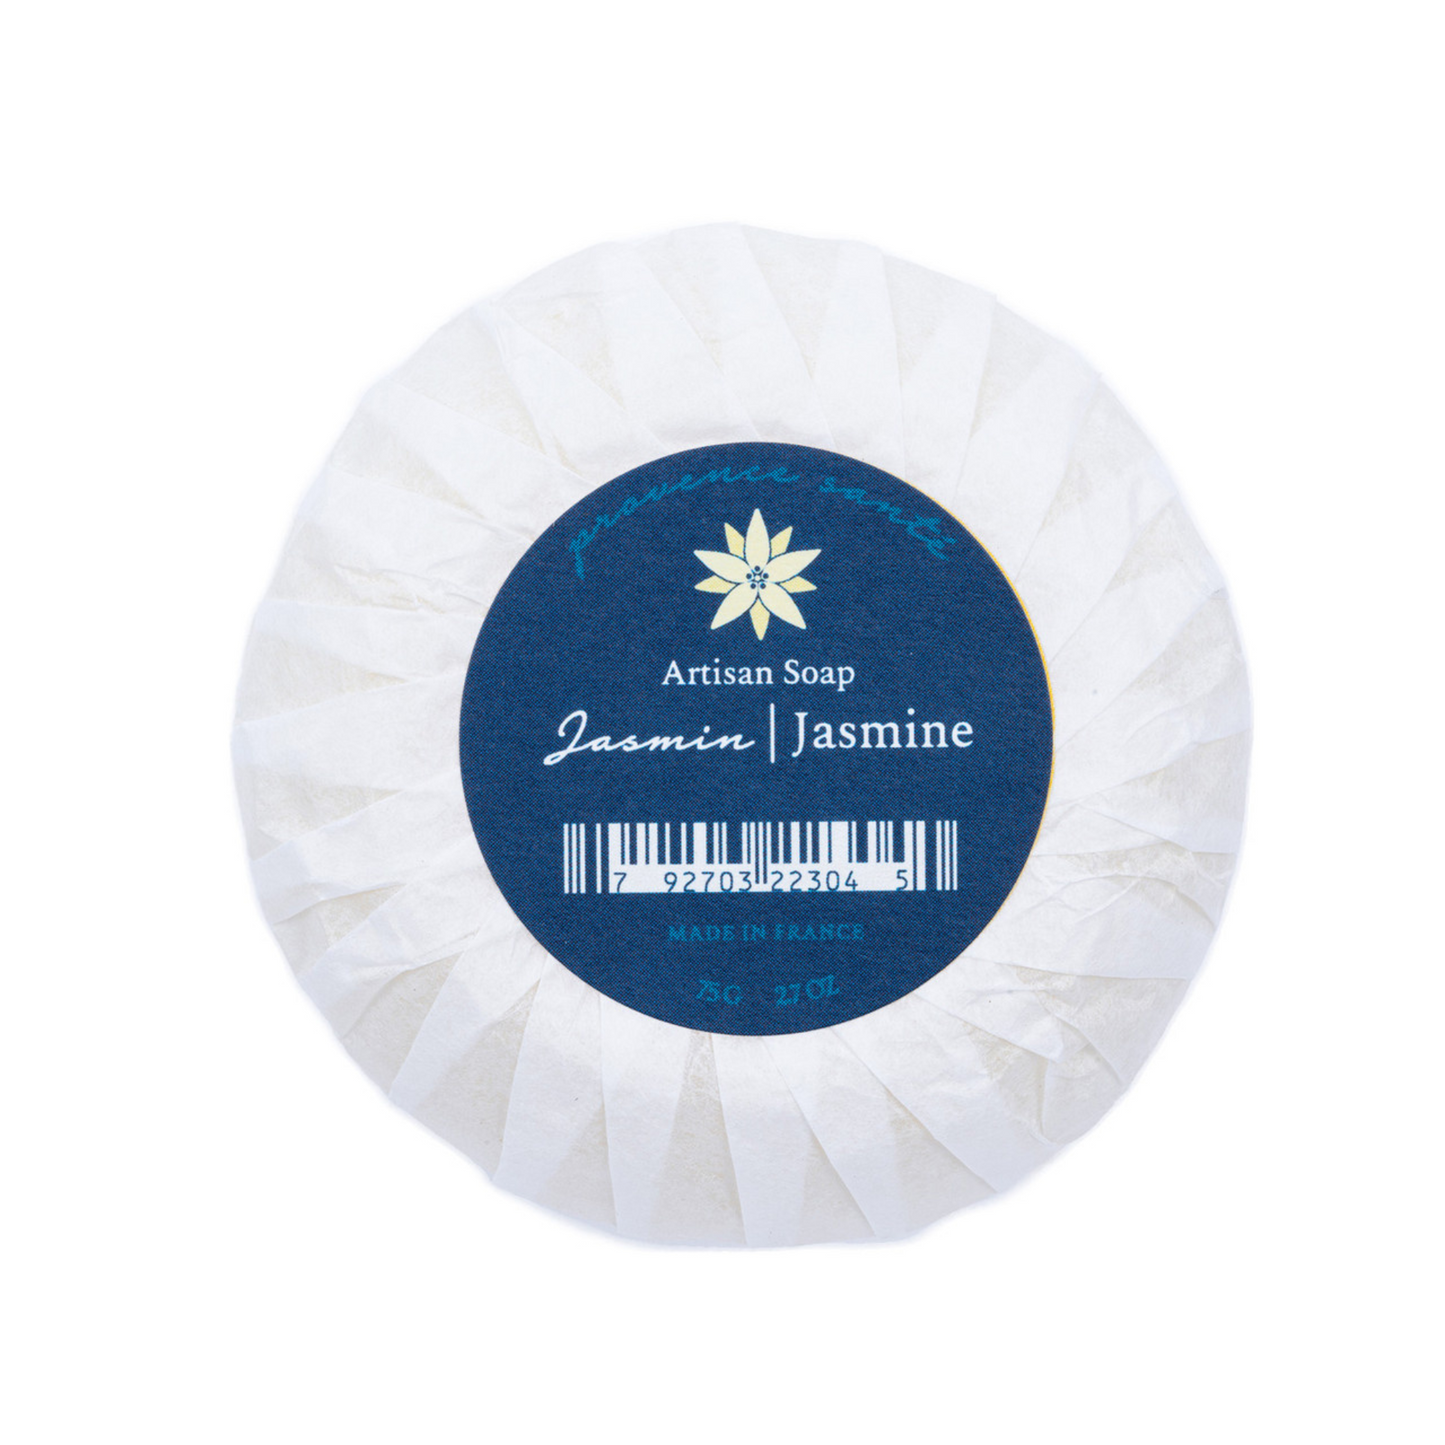 Primary Image of Provence Sante Jasmine Hand Soap (2.7 oz)